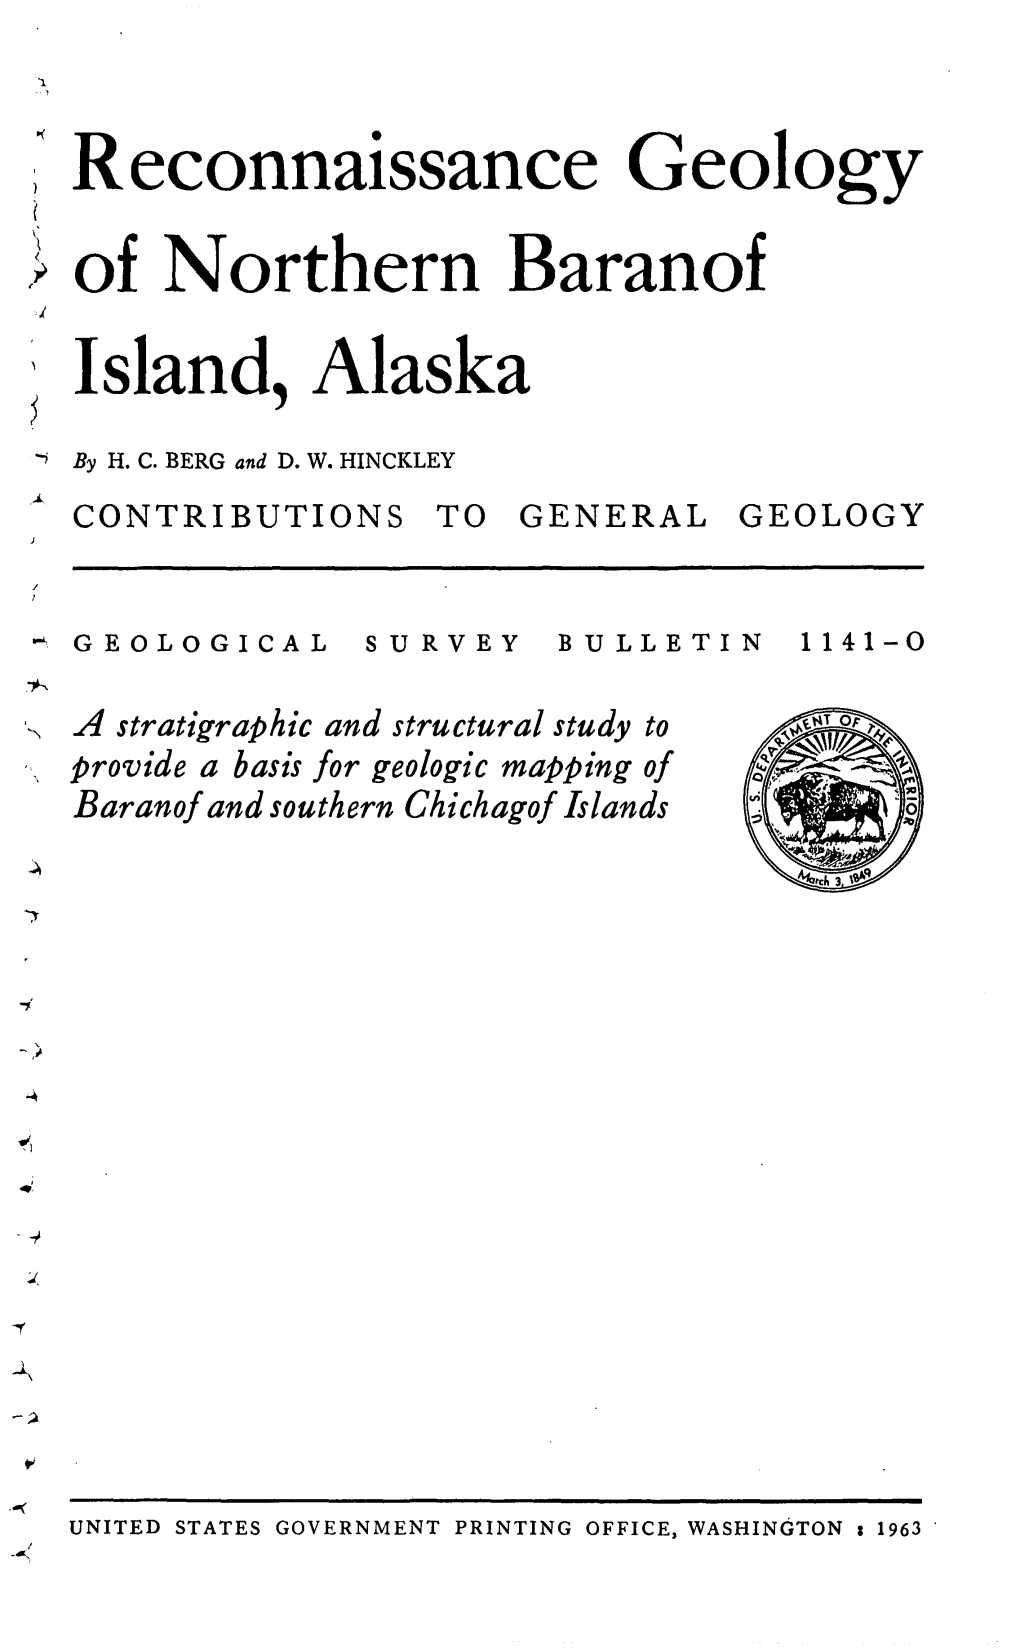 Reconnaissance Geology of Northern Baranof Island, Alaska